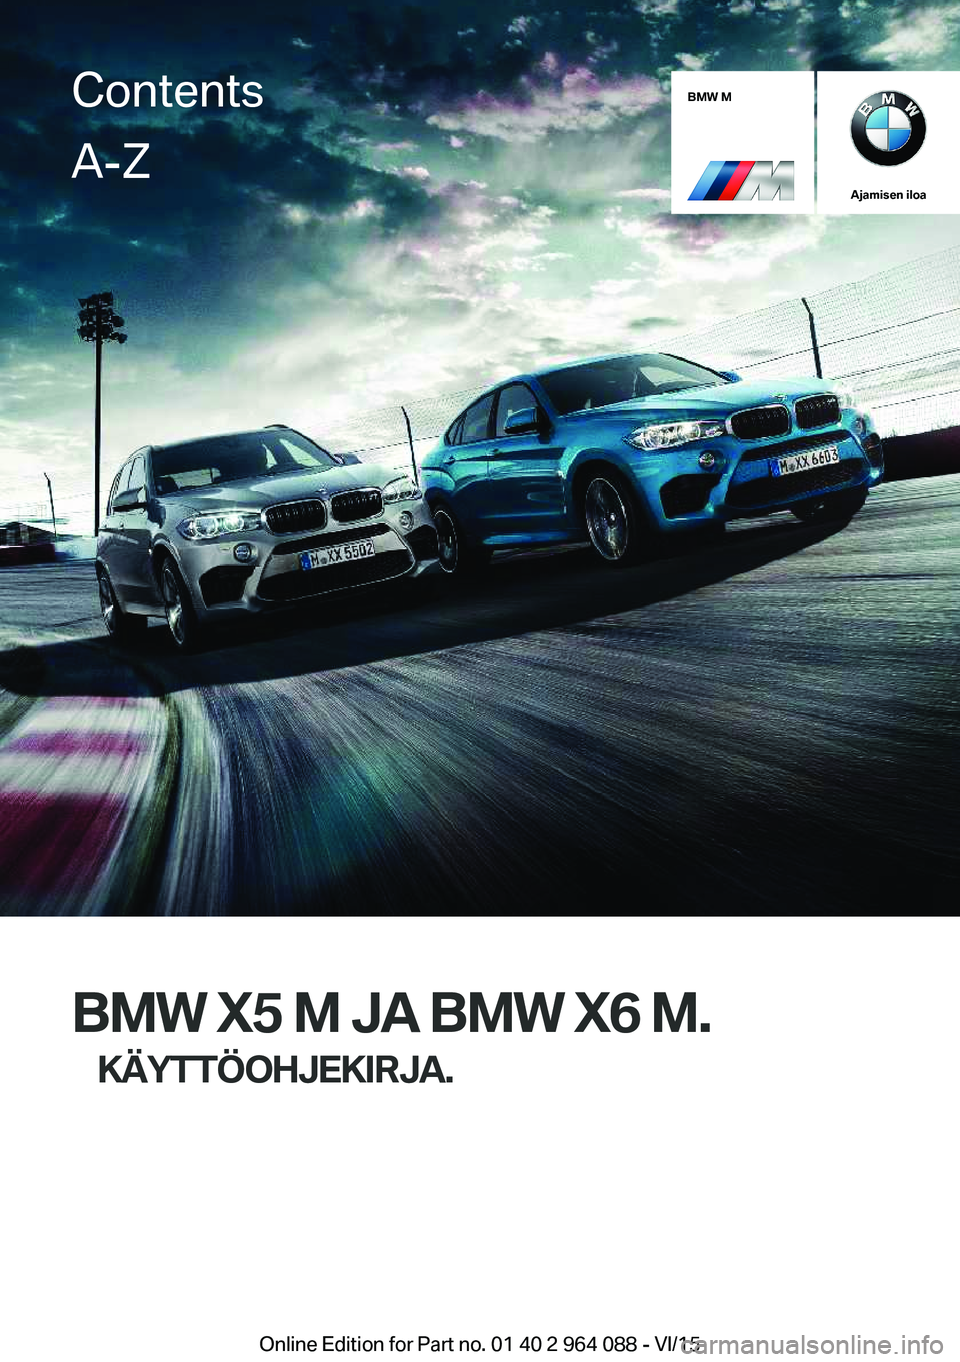 BMW X5 M 2016  Omistajan Käsikirja (in Finnish) BMW M
Ajamisen iloa
BMW X5 M JA BMW X6 M.KÄYTTÖOHJEKIRJA.
ContentsA-Z
Online Edition for Part no. 01 40 2 964 088 - VI/15   